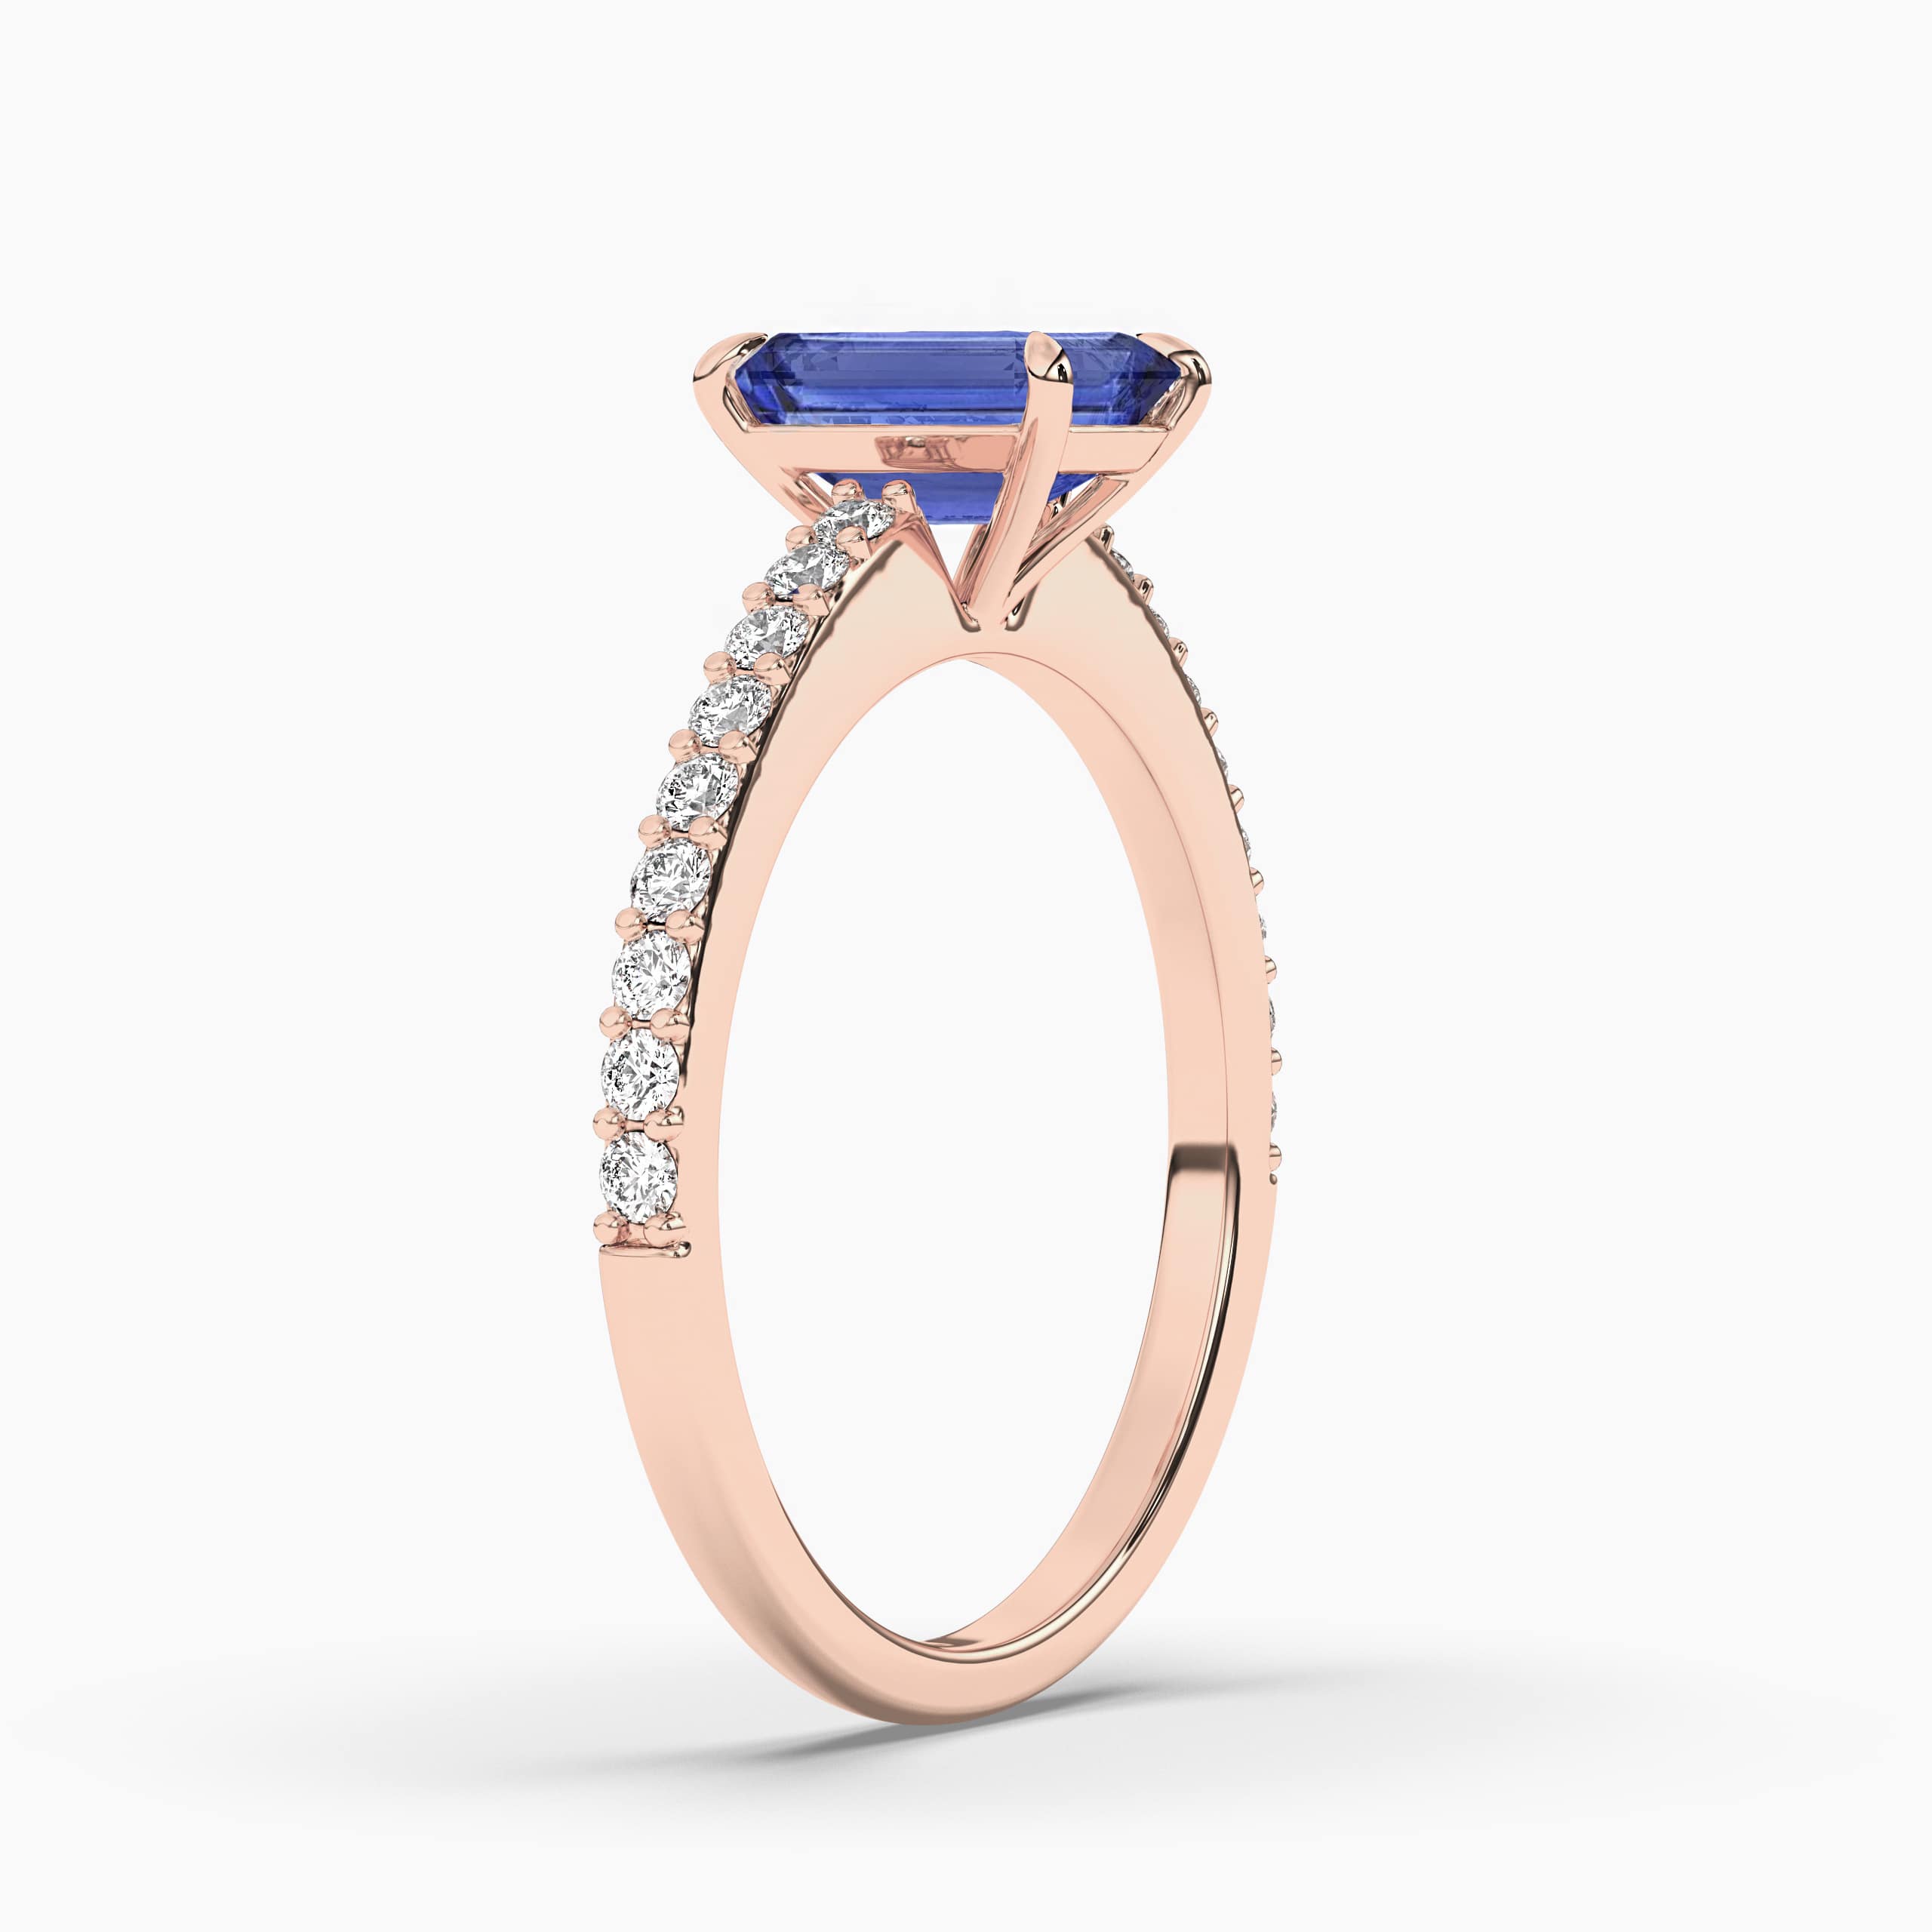 EMERALD CUT BLUE SAPPHIRE DIAMOND ENGAGEMENT RING ROSE GOLD